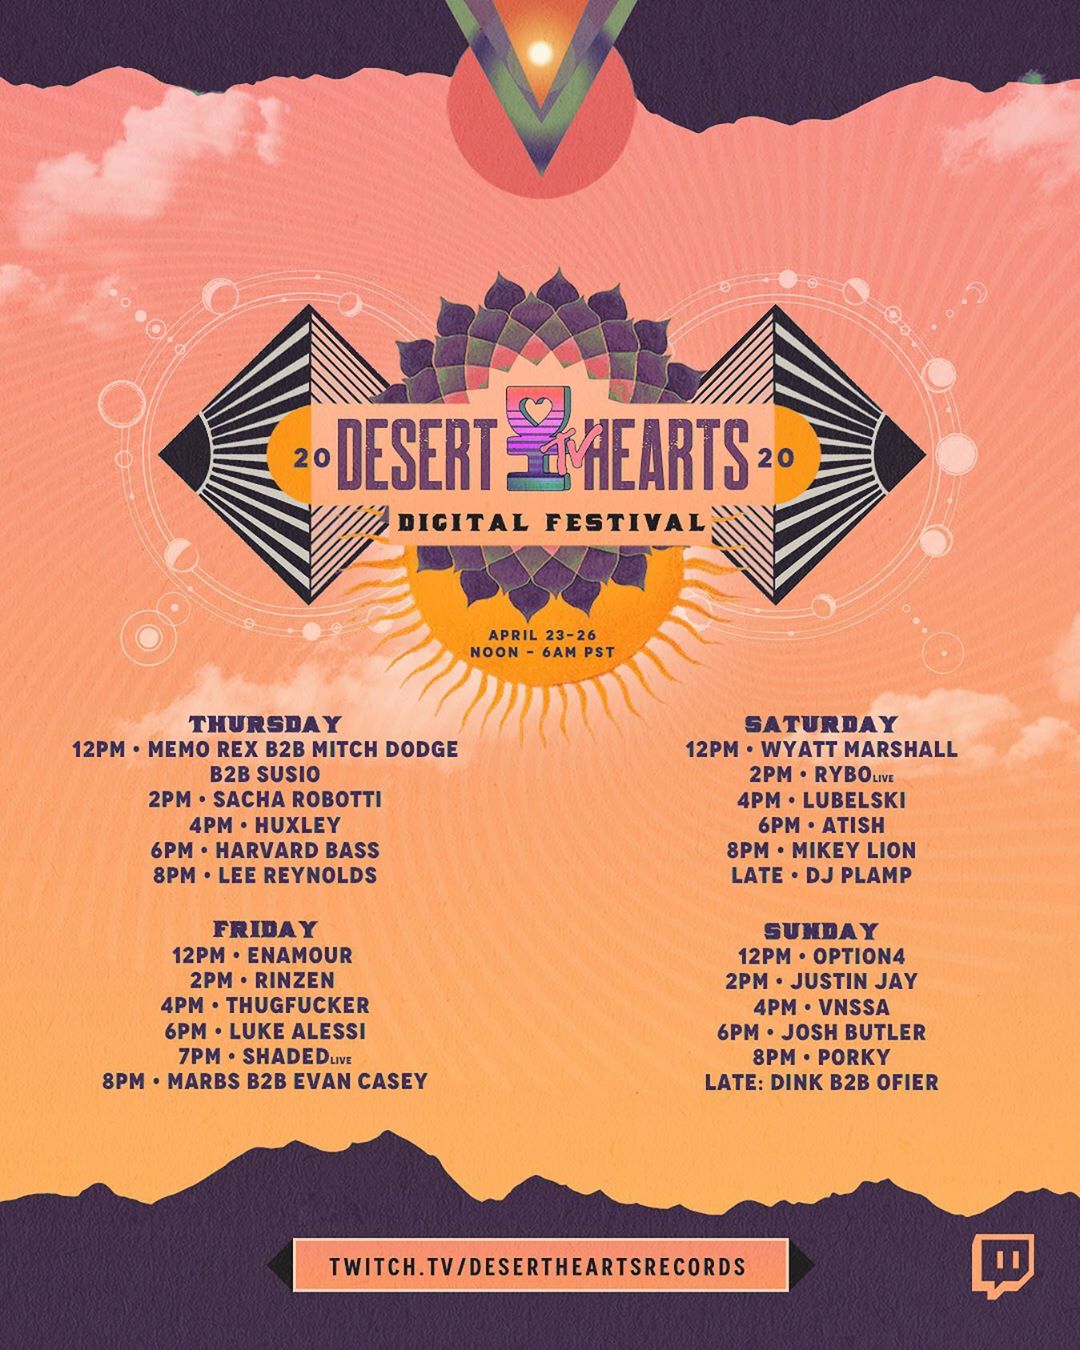 Desert Hearts Digital Festival Lineup and Schedule